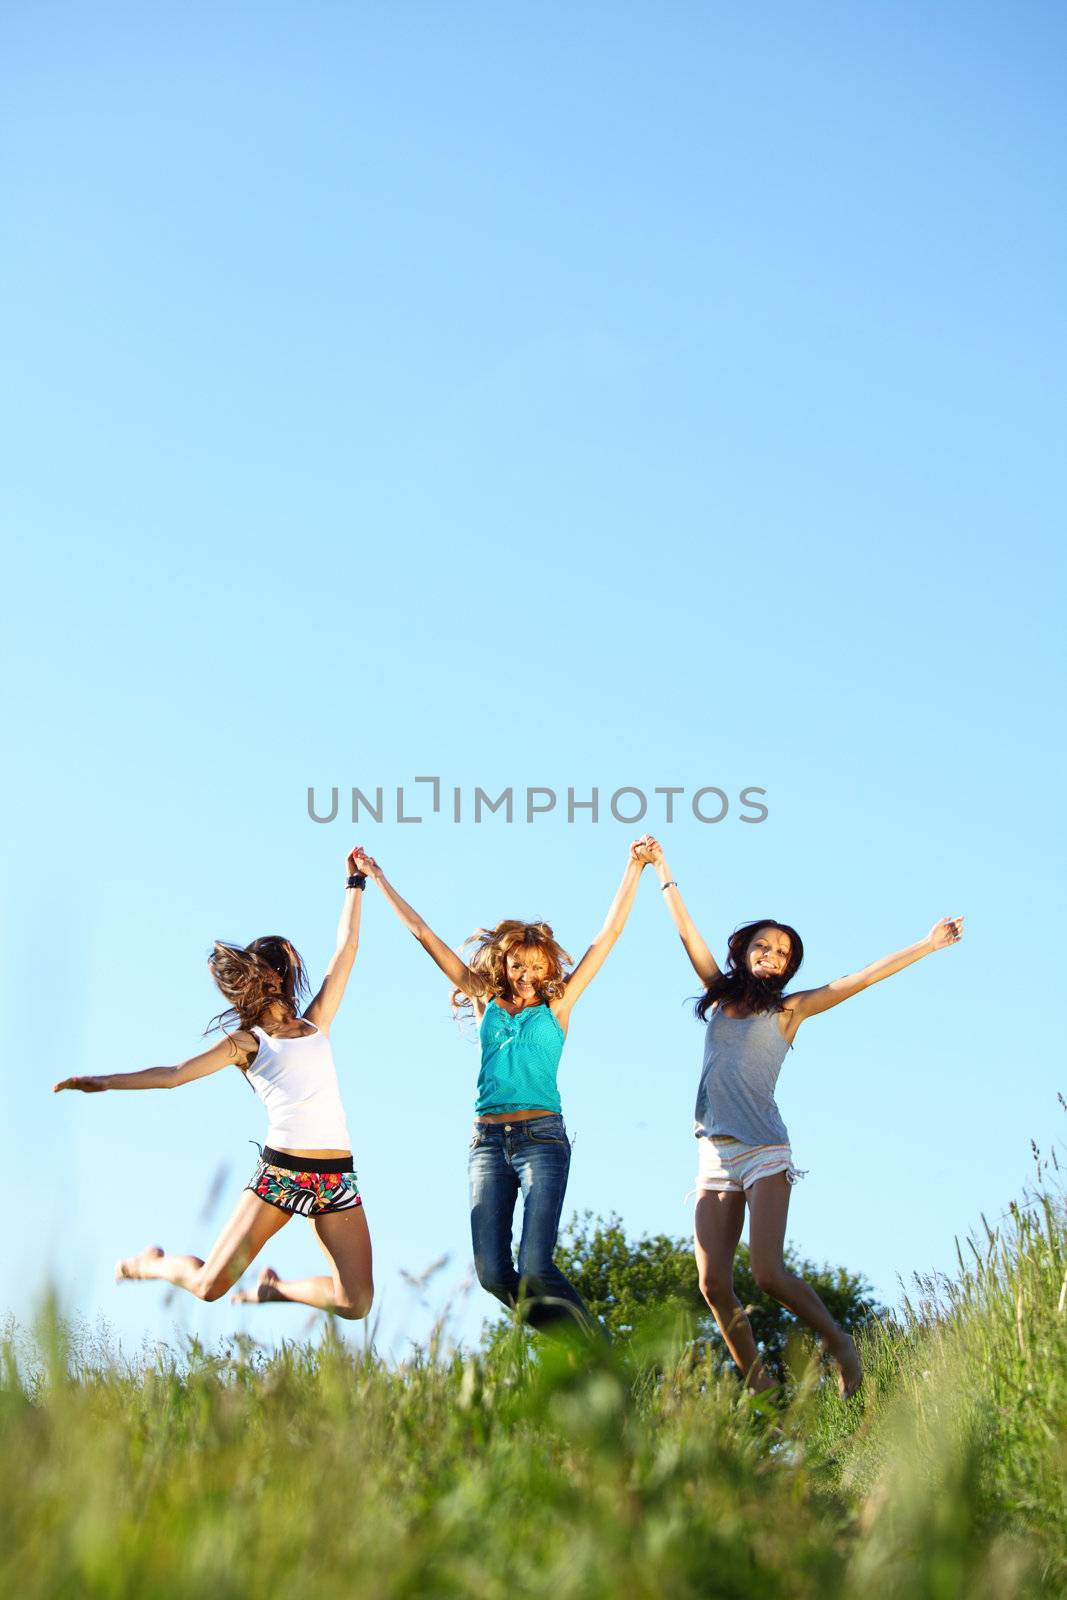 fun smile girlfriends jump to sky